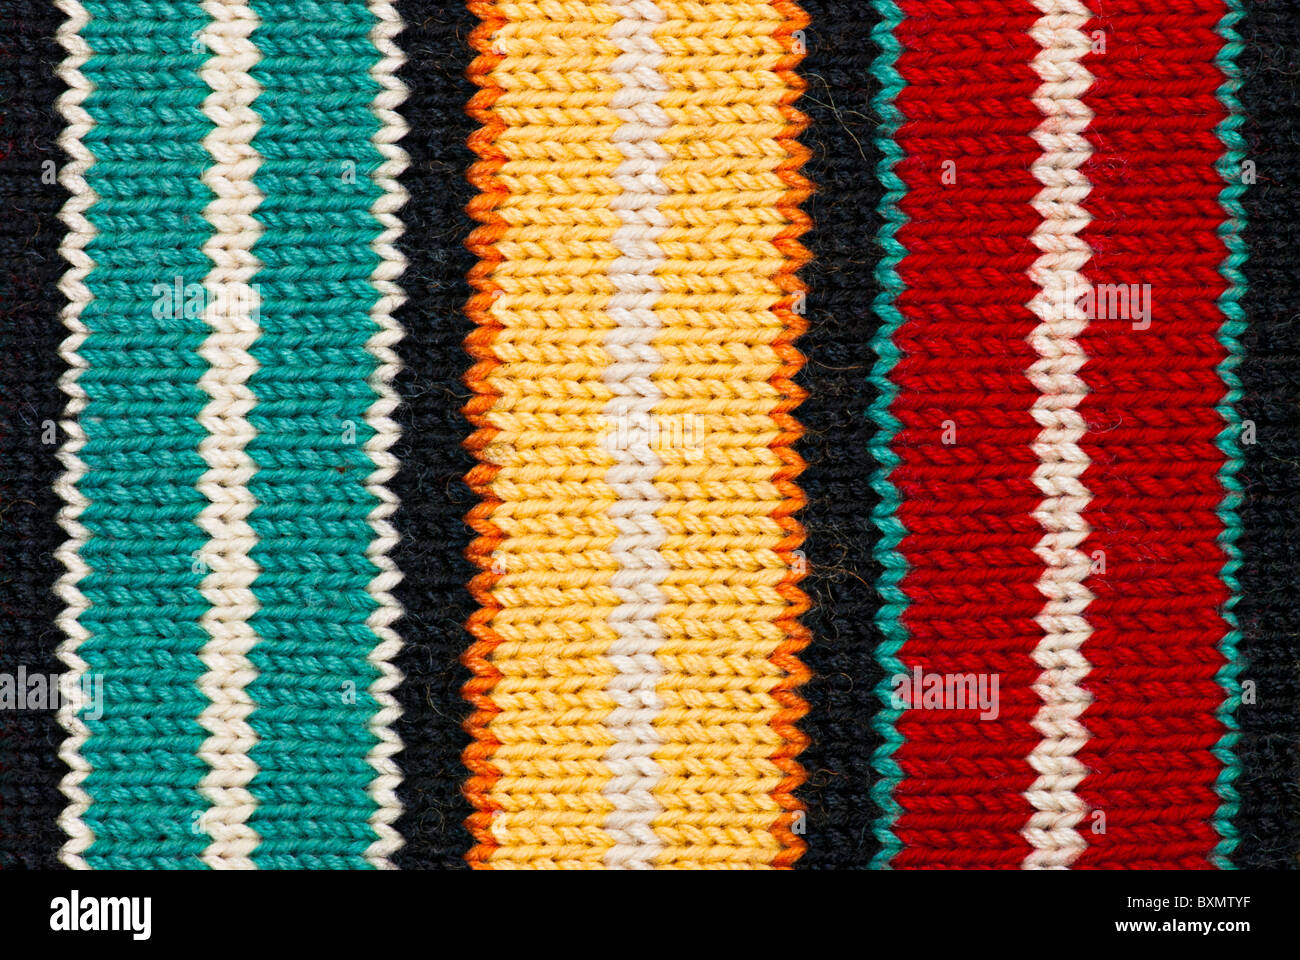 Multicolored knitting background of handmade woolen pattern Stock Photo